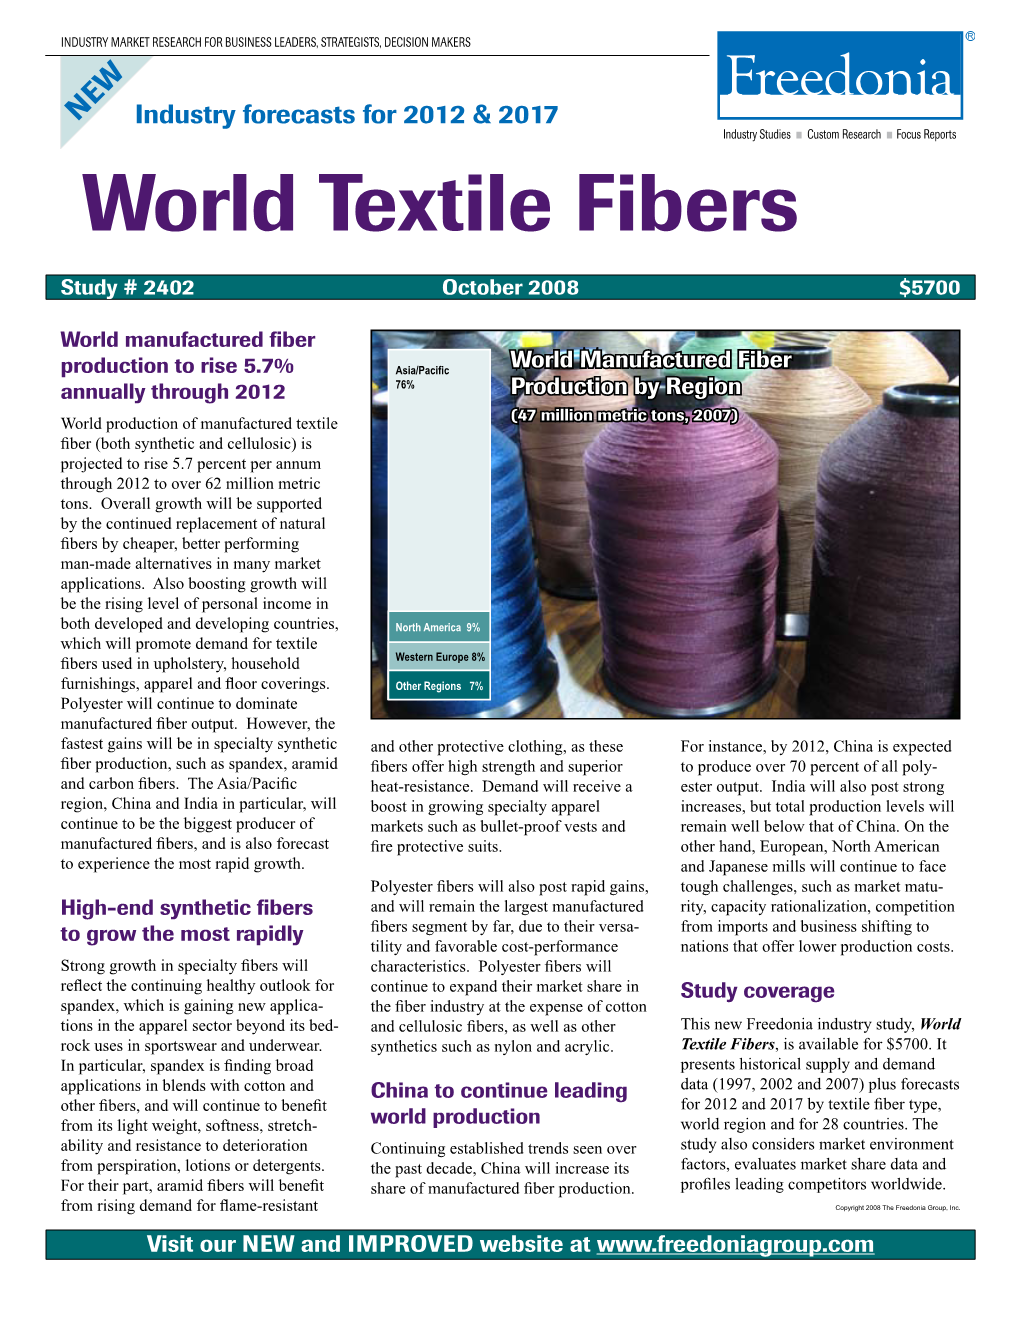 World Textile Fibers